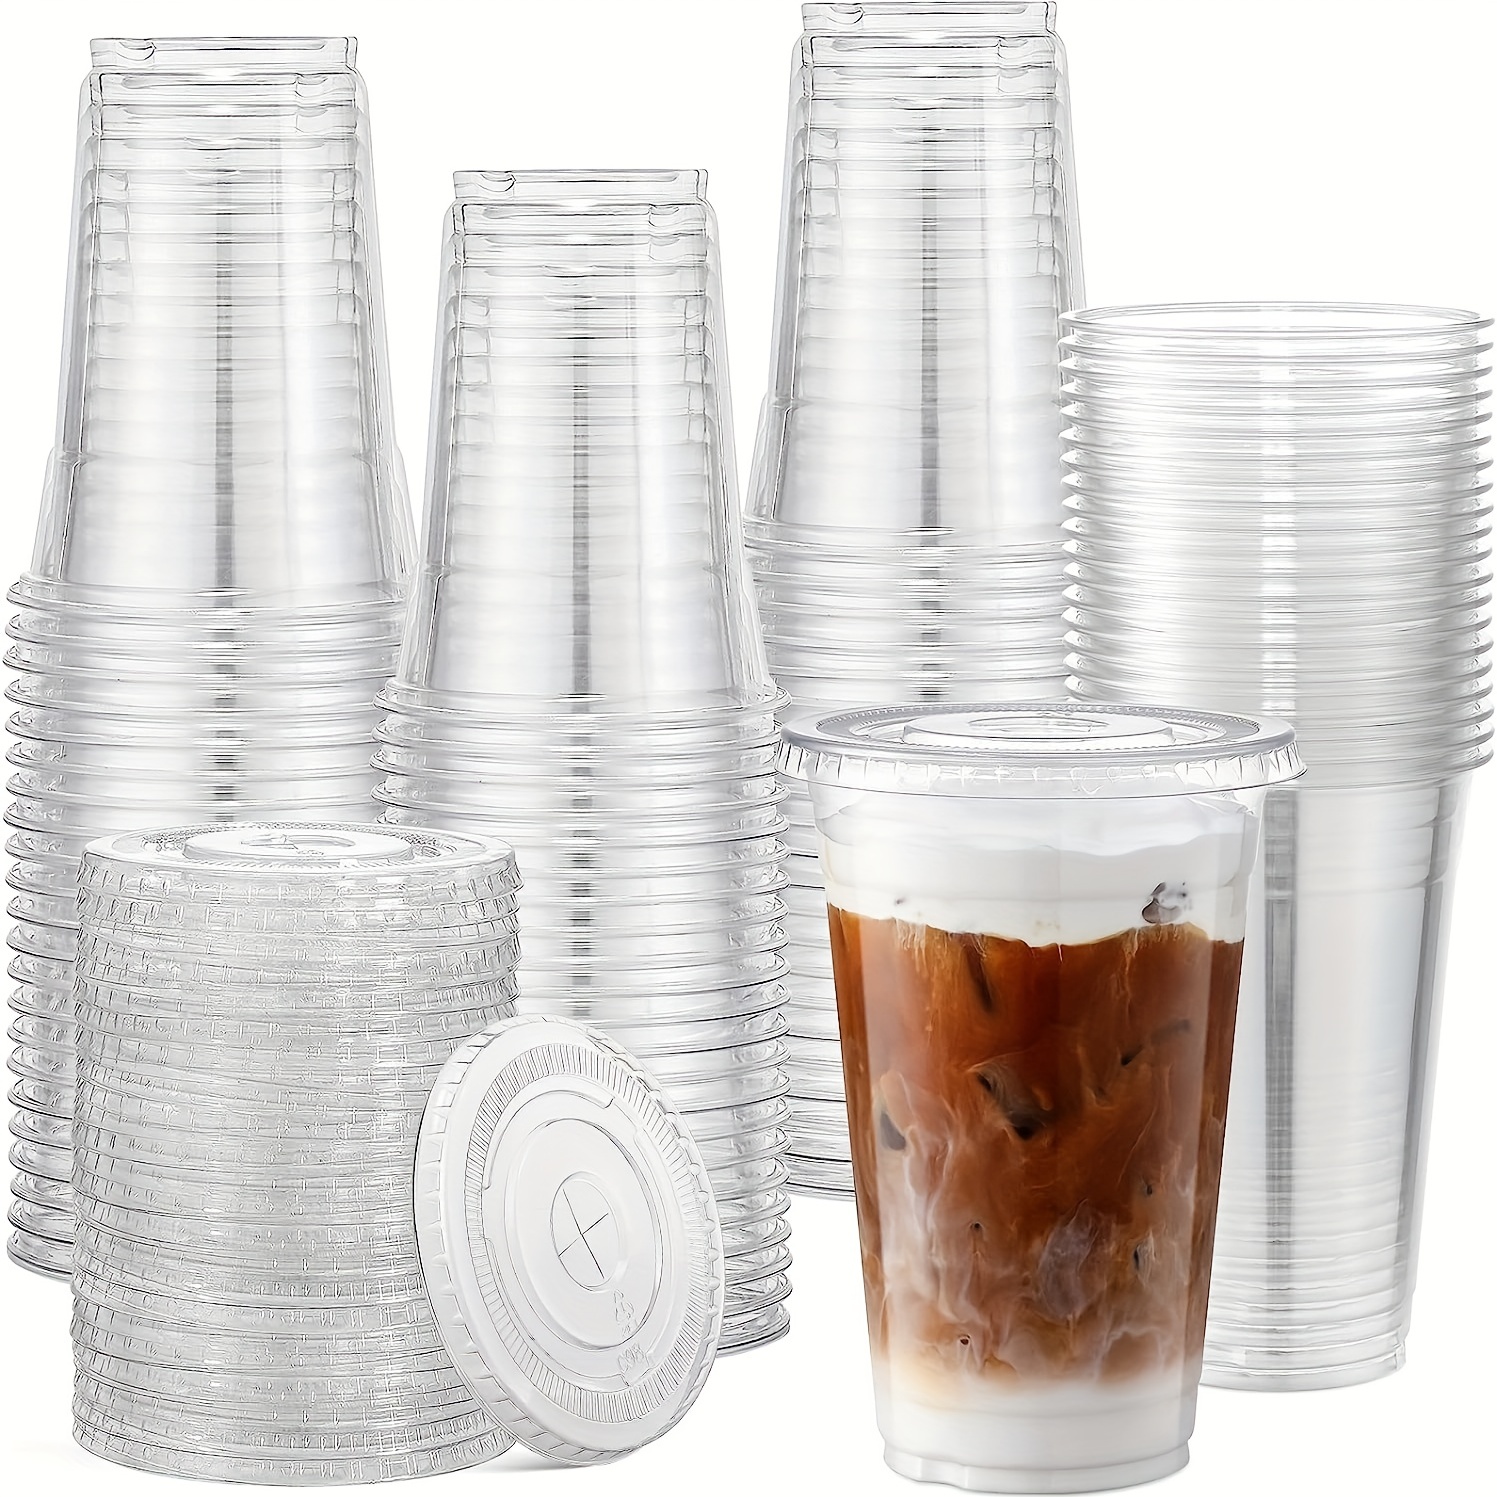 Plastic Disposable Shot Glass